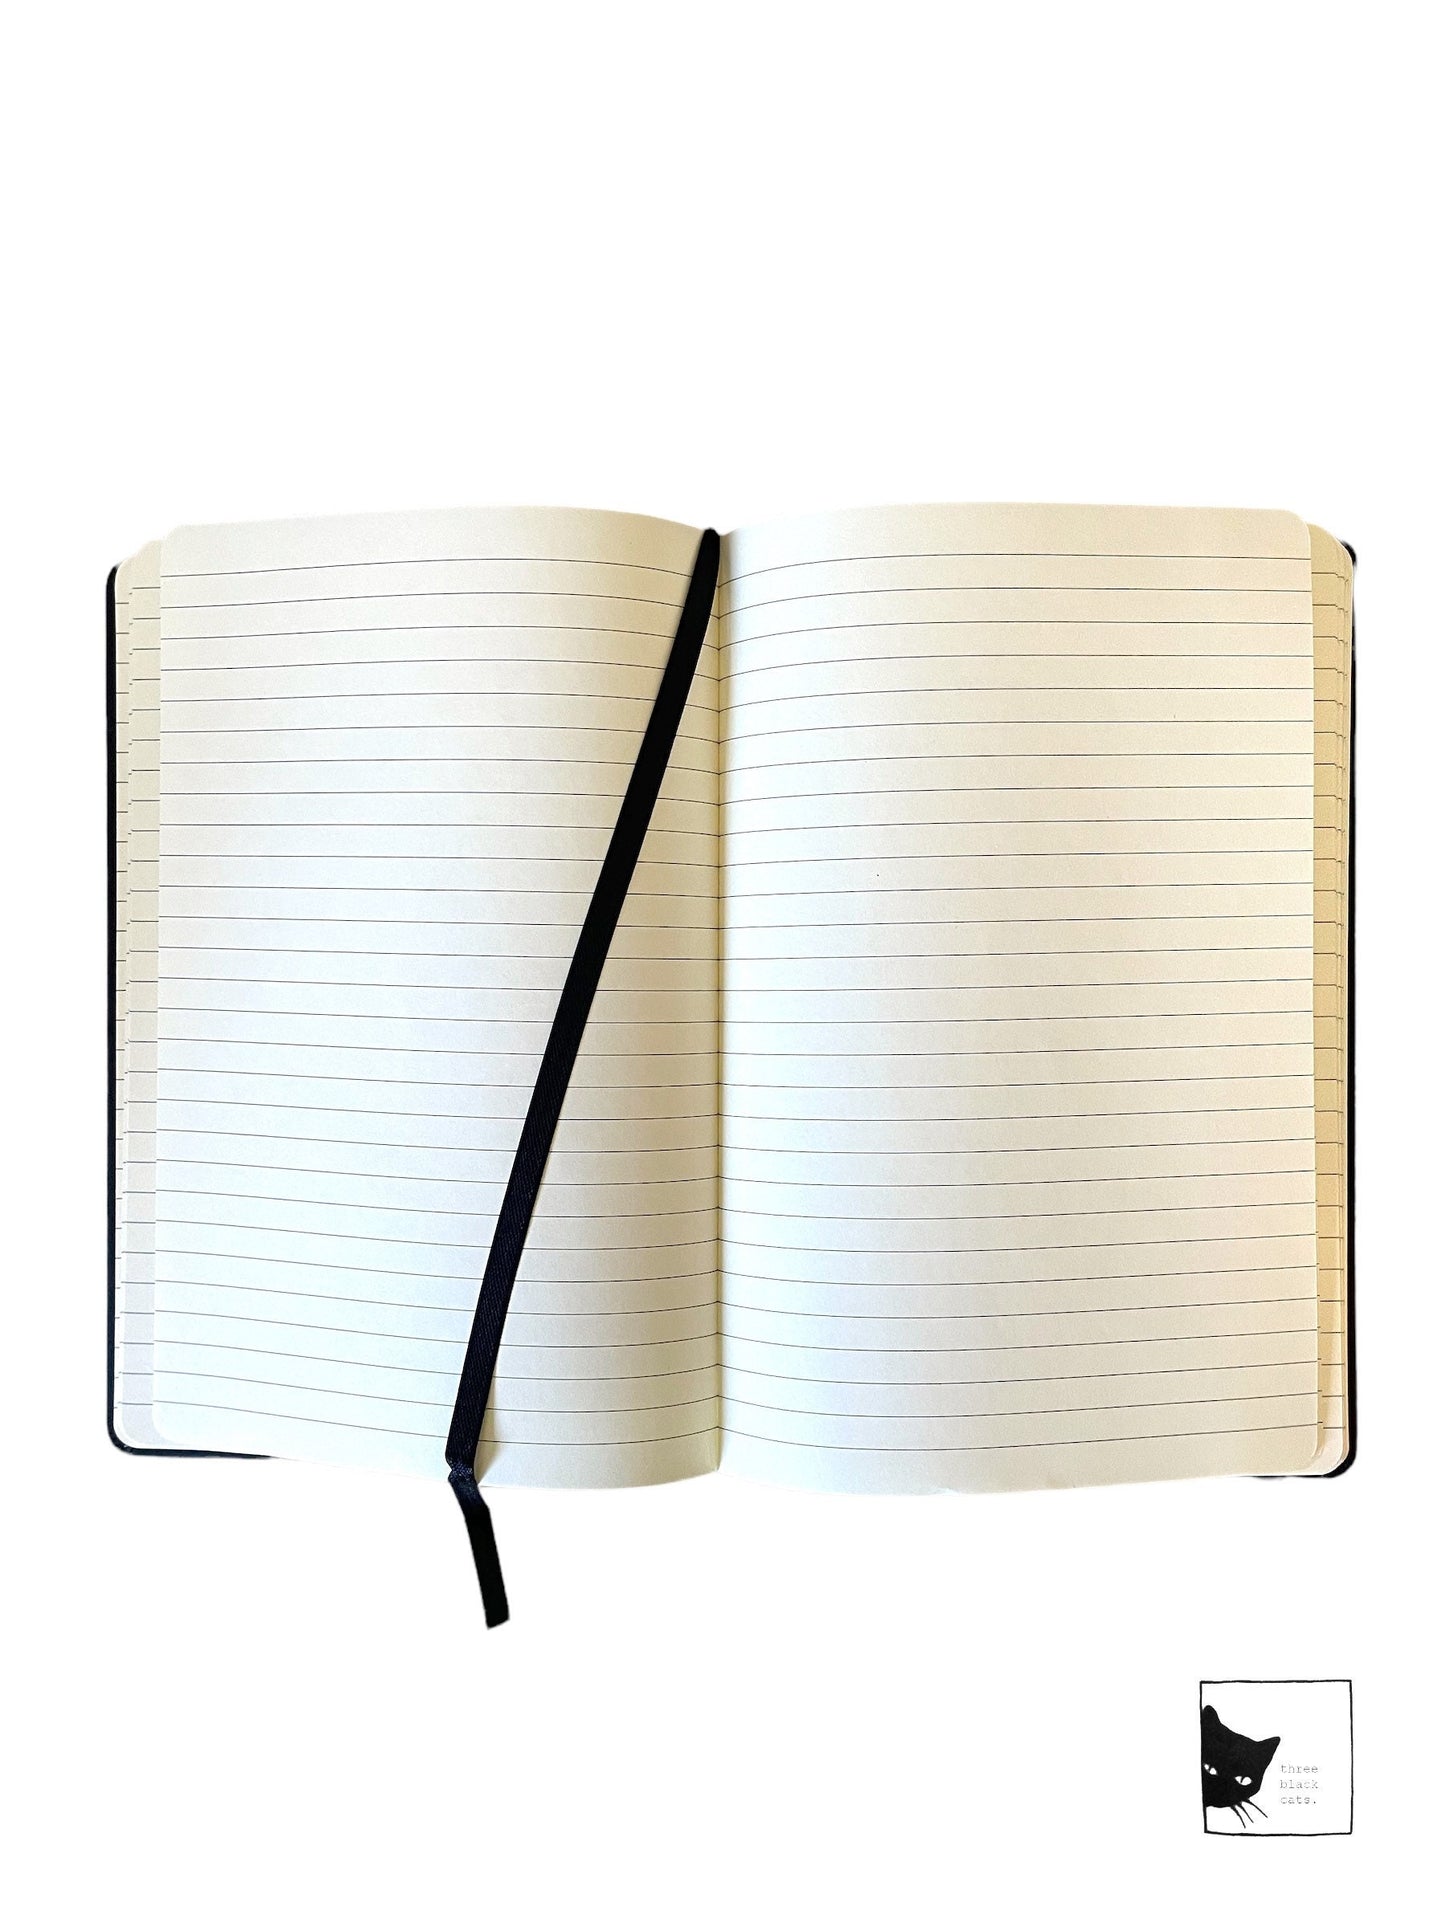 Plans for getting organized AF, Black Lined Journal